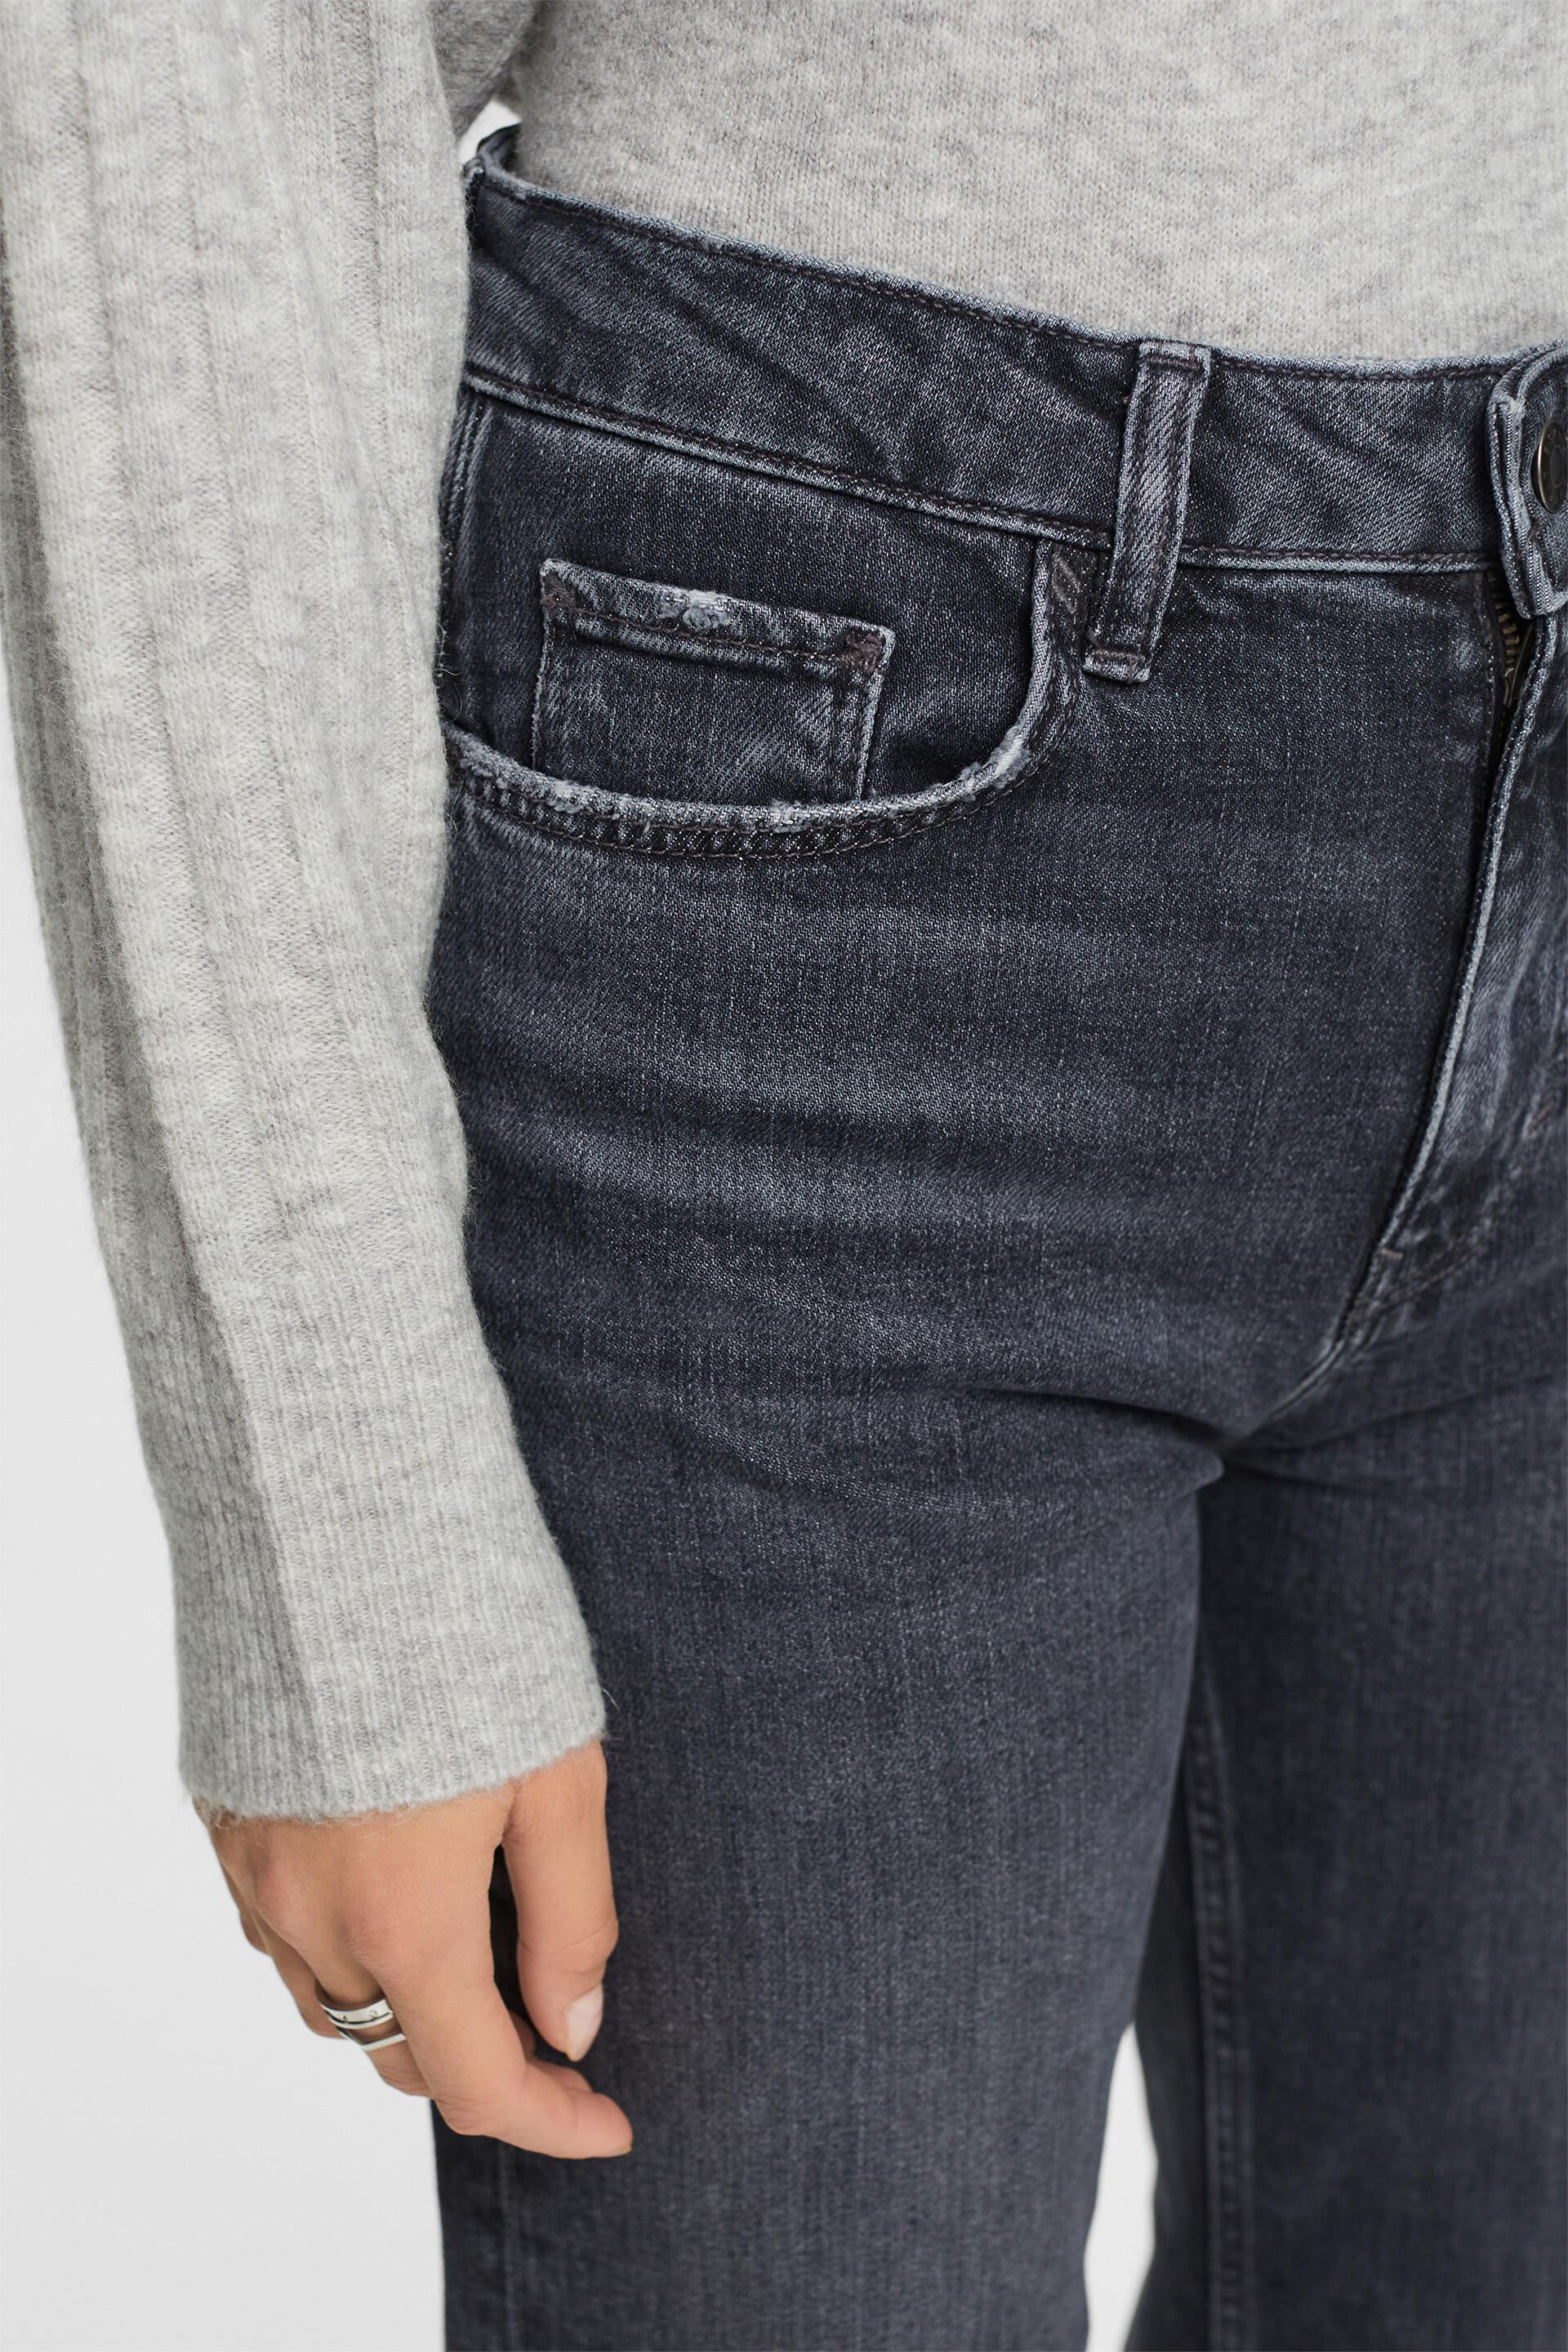 Esprit Damen Knöchellange Straight-Fit-Jeans im Stil der 80er